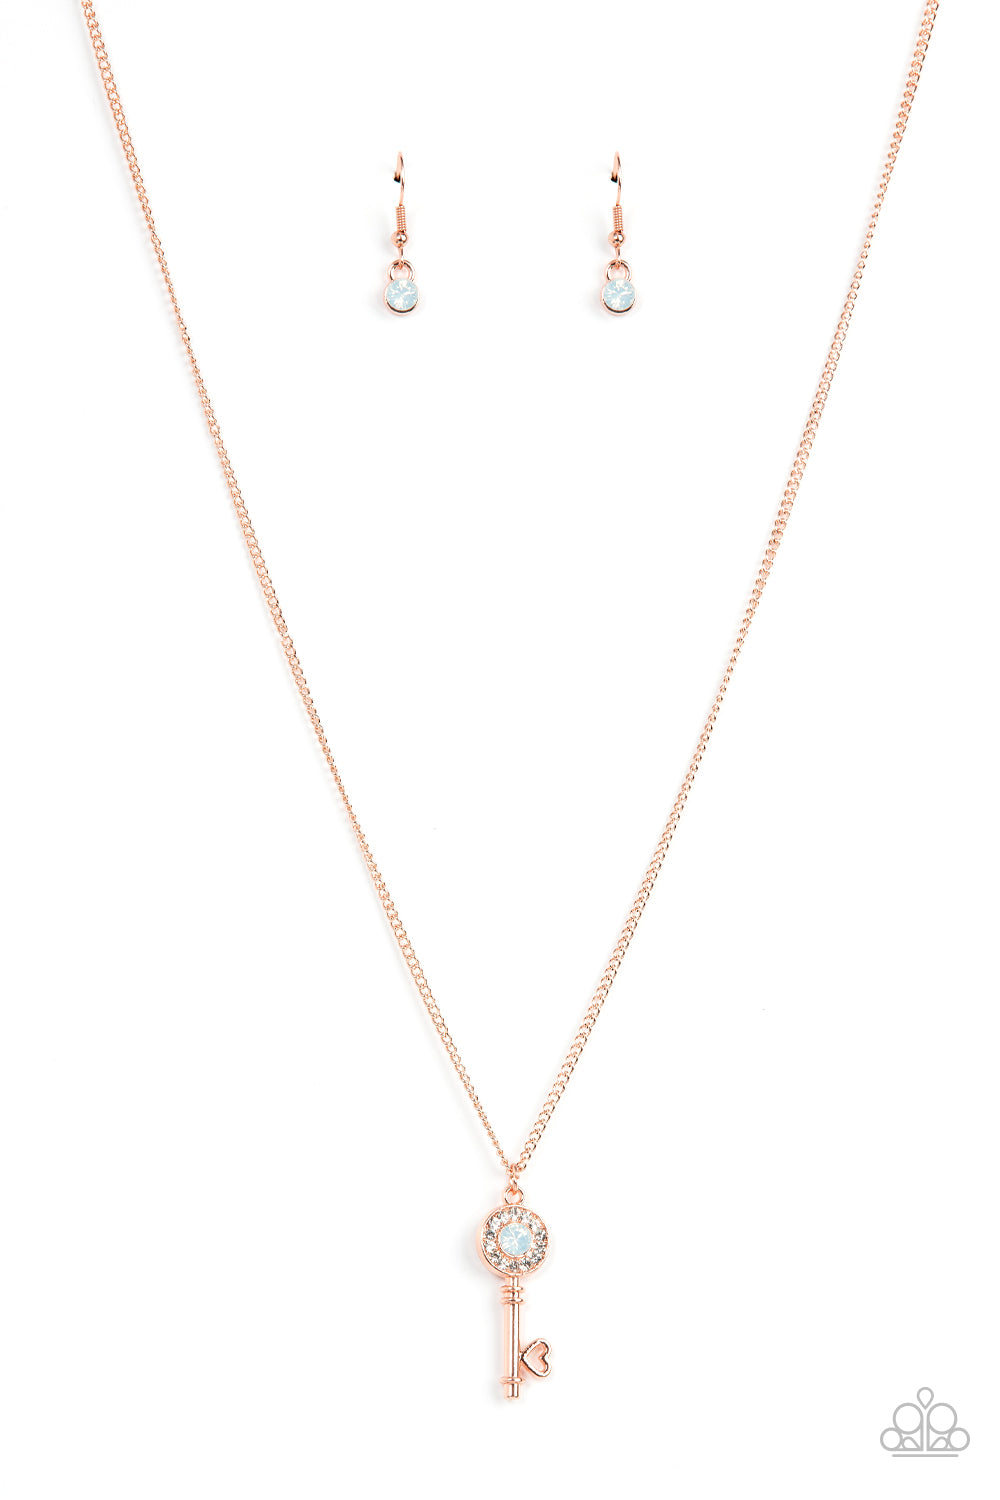 Prized Key Player - Copper Necklace Set - Princess Glam Shop